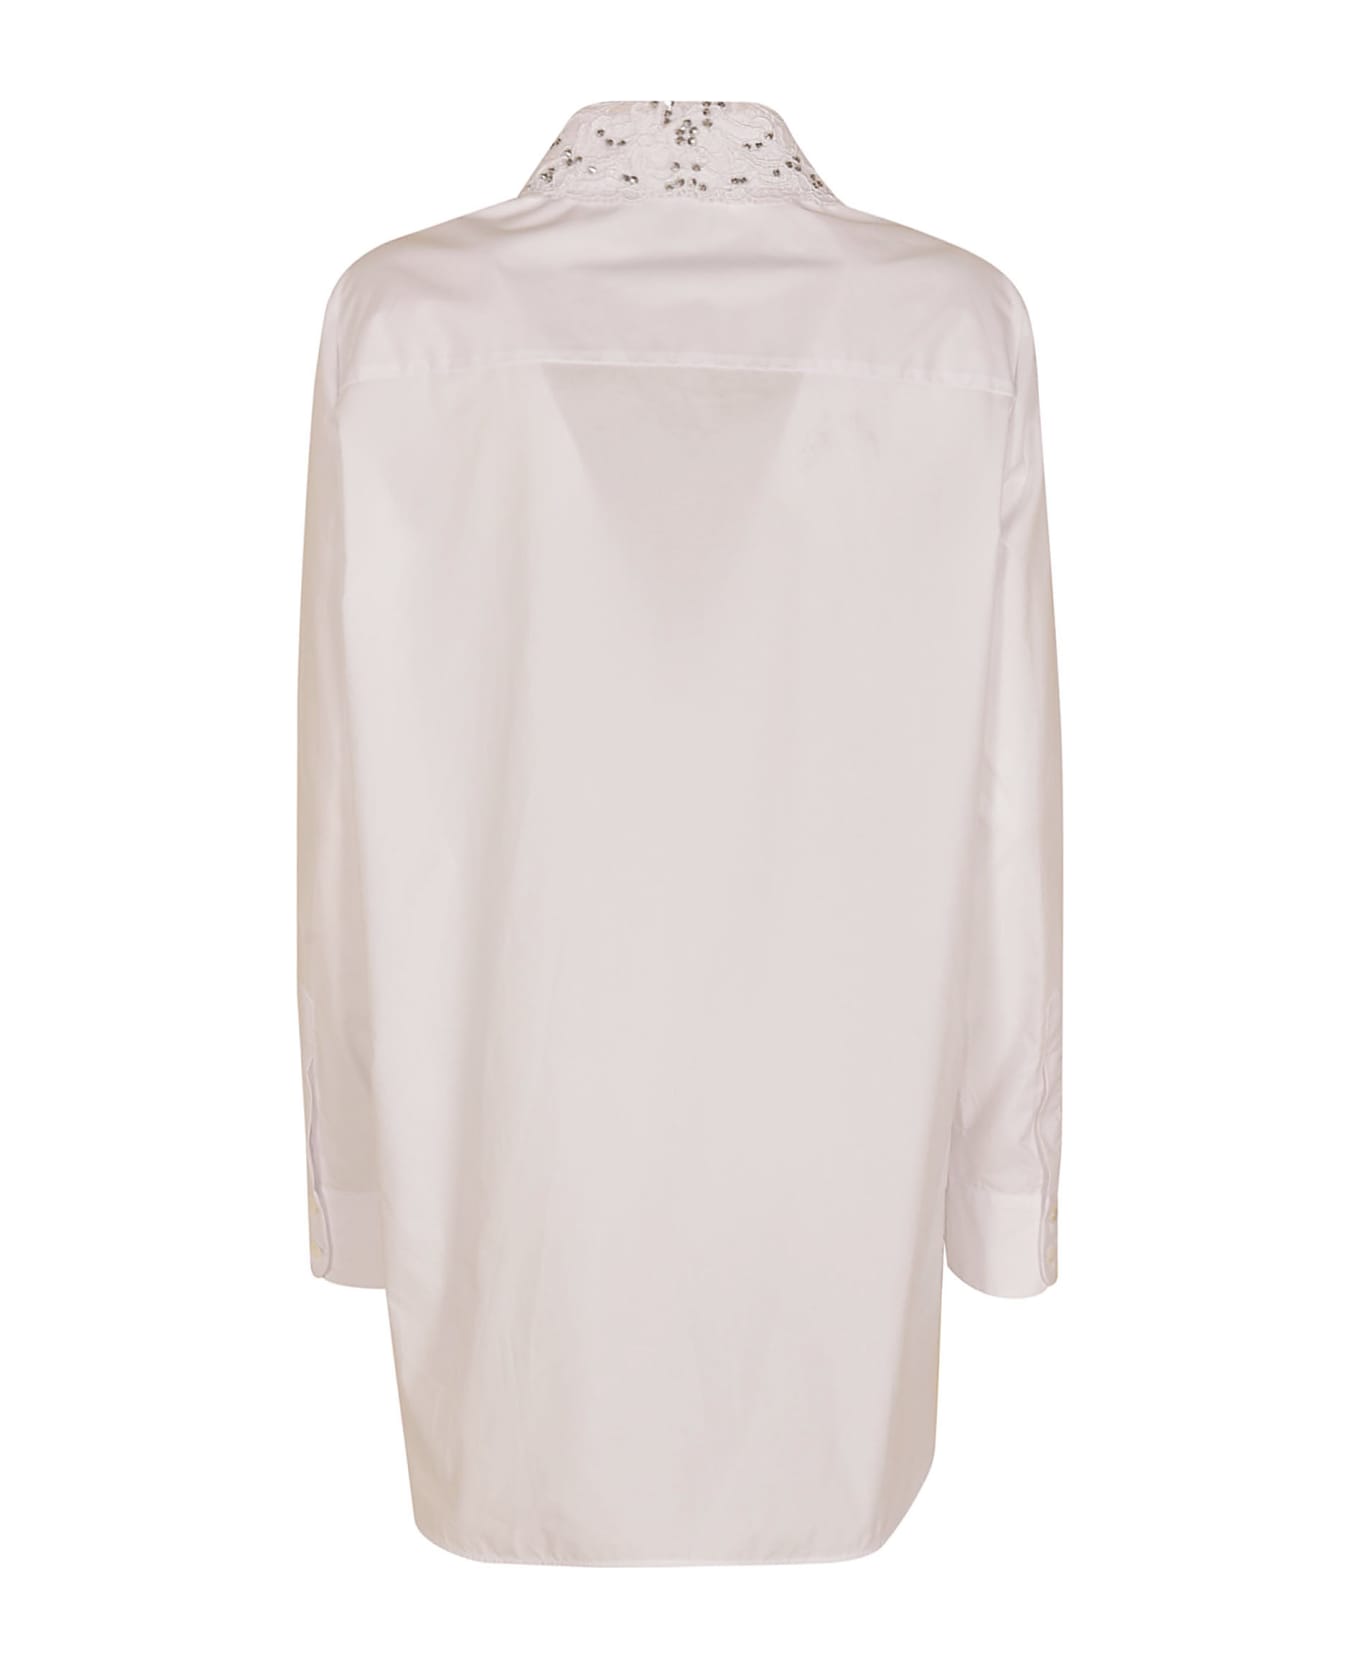 Ermanno Scervino Embellished Collar Plain Shirt - White シャツ